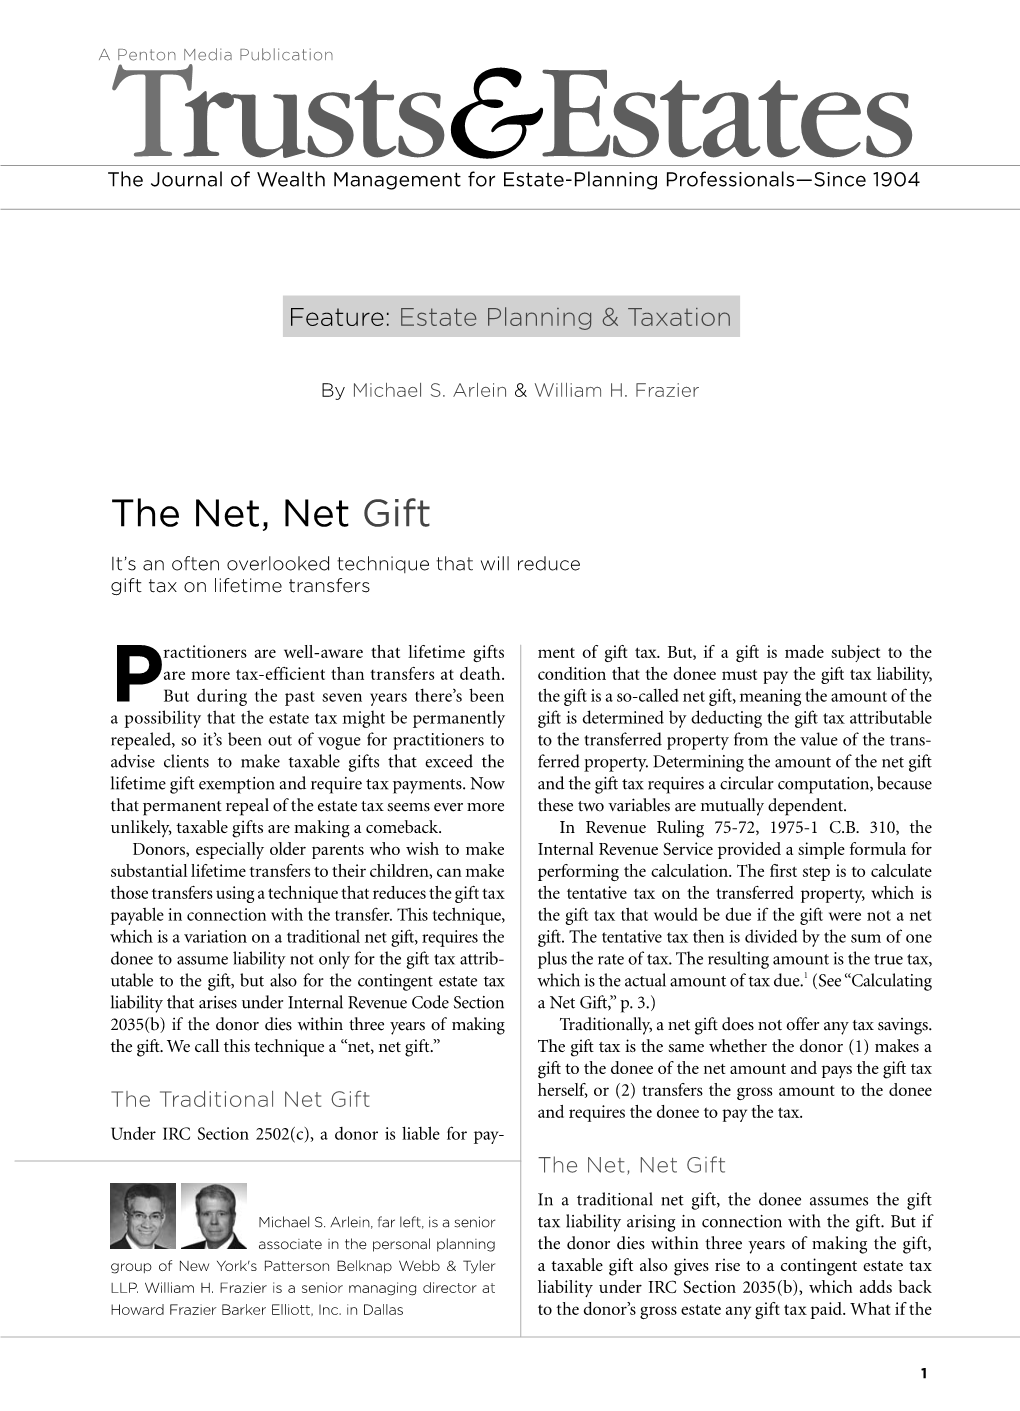 The Net, Net Gift